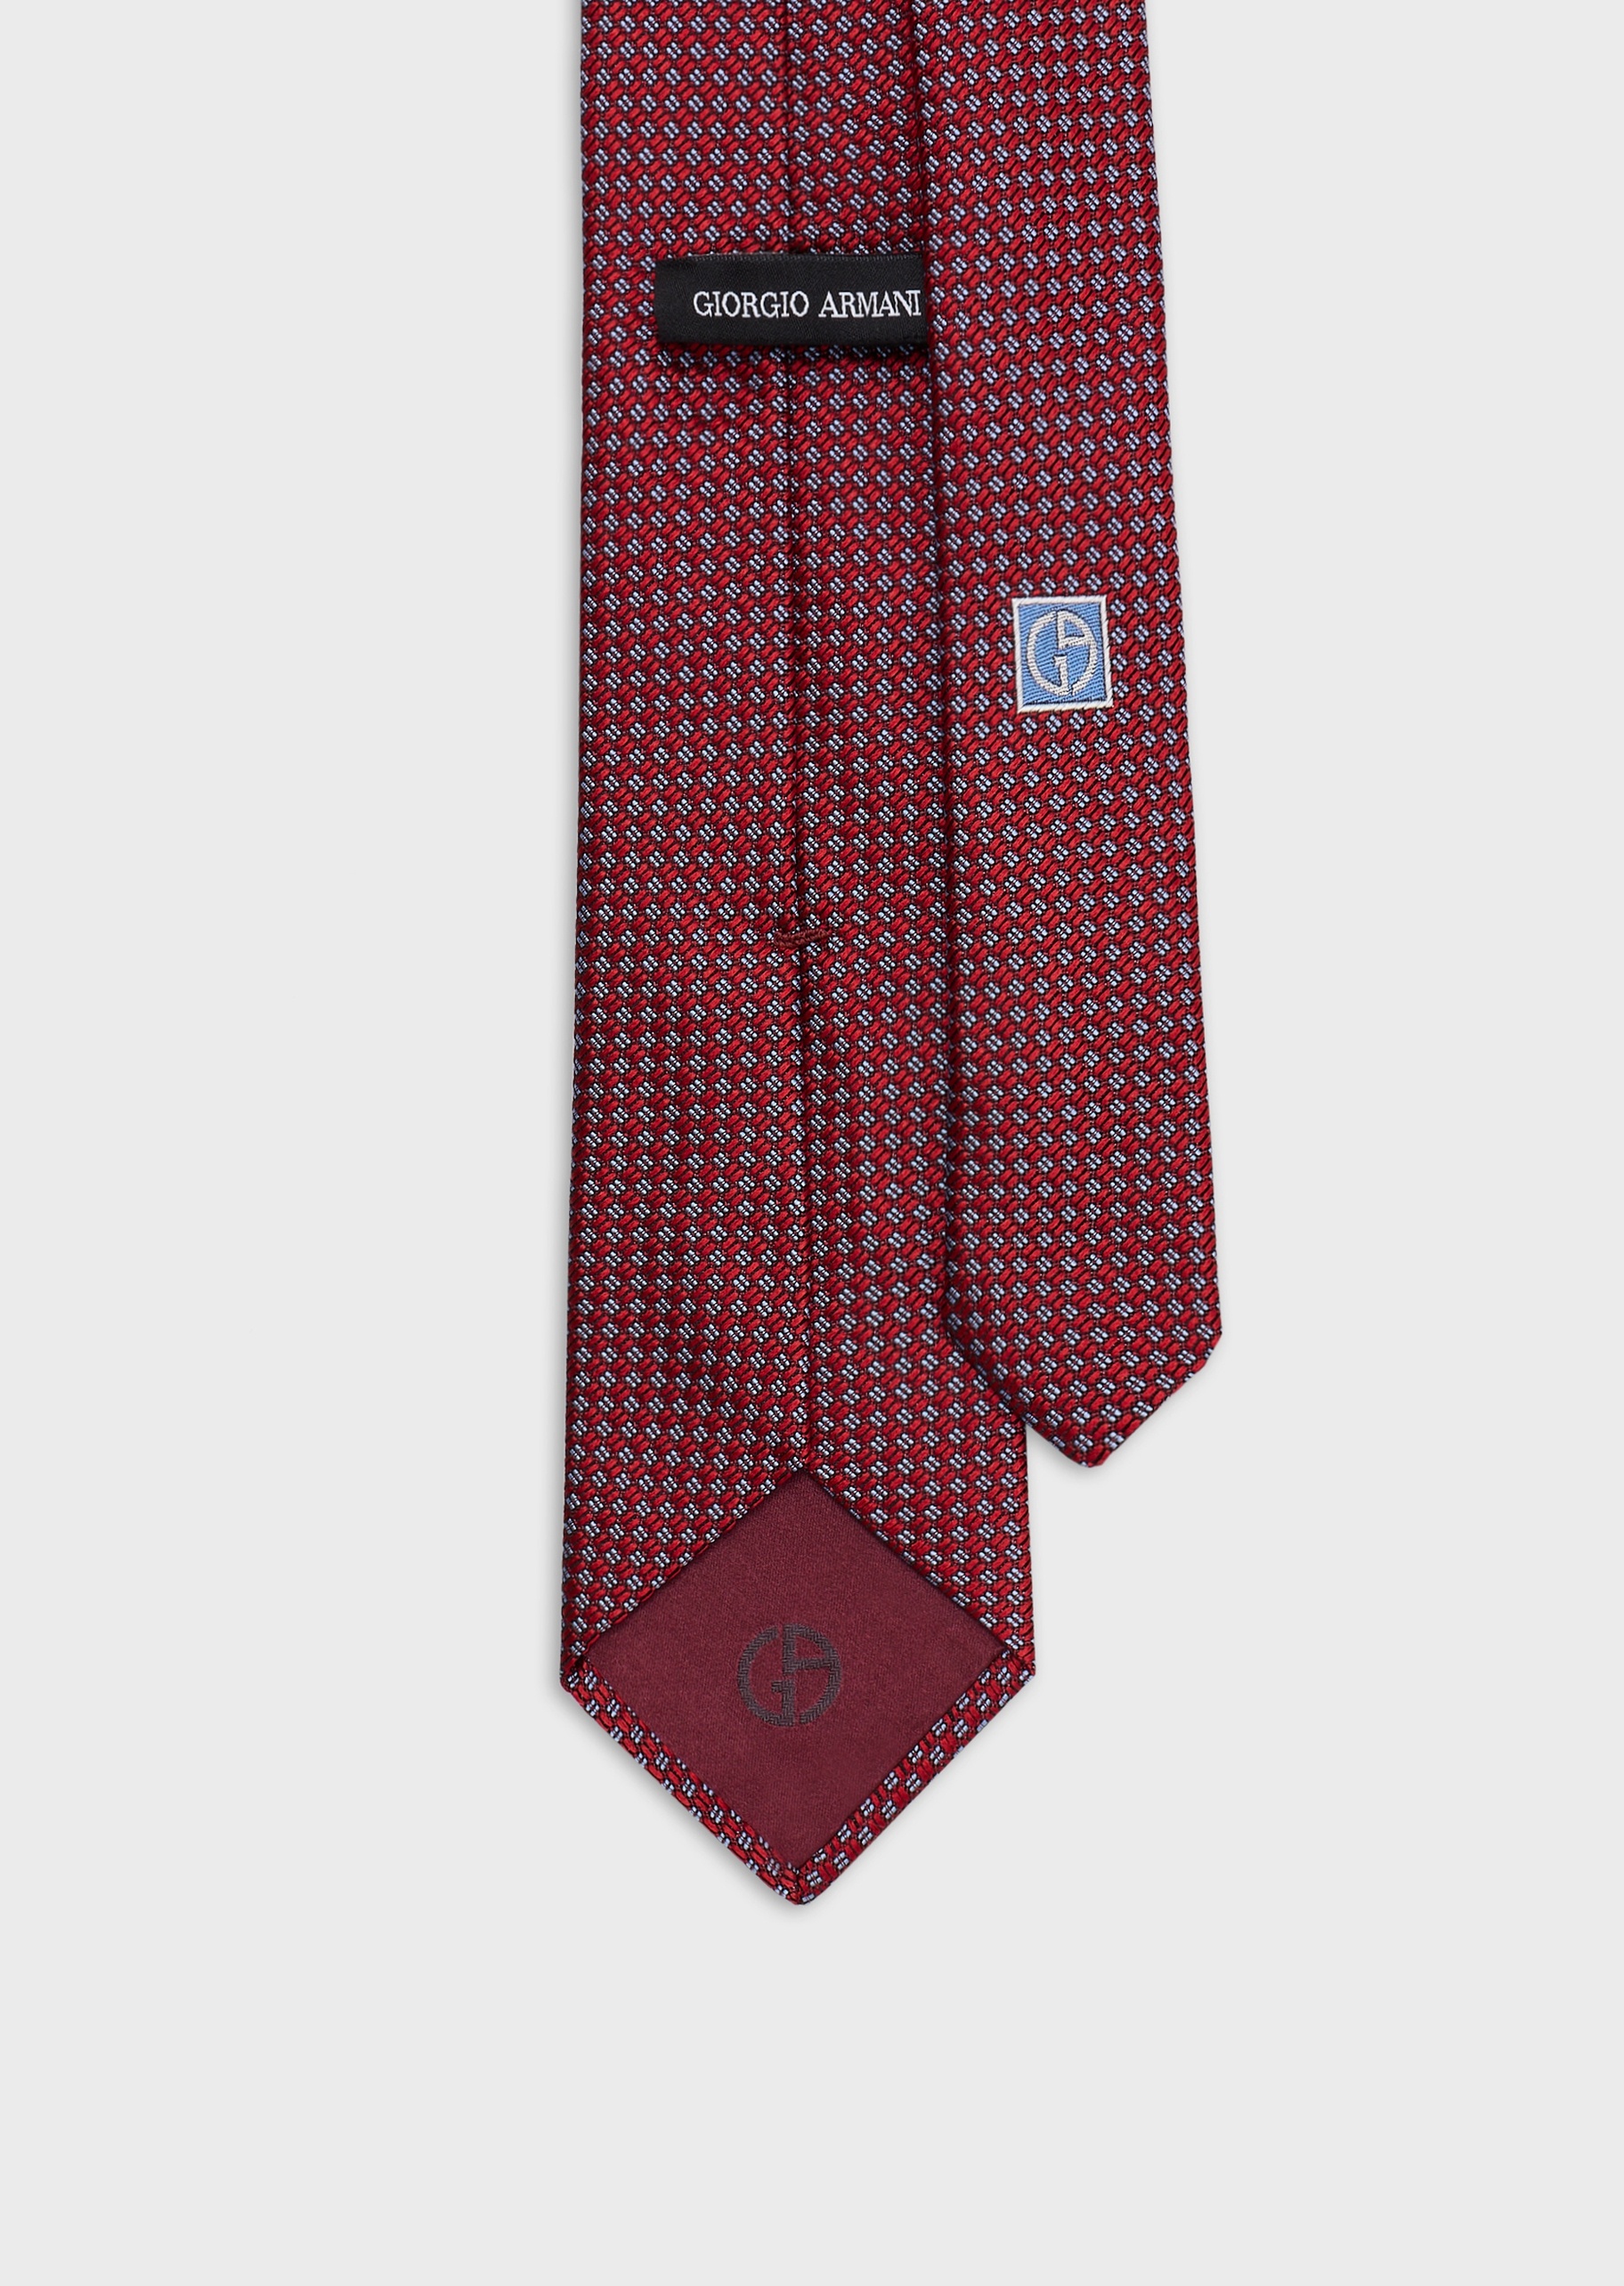 Giorgio Armani 通体几何提花真丝领带